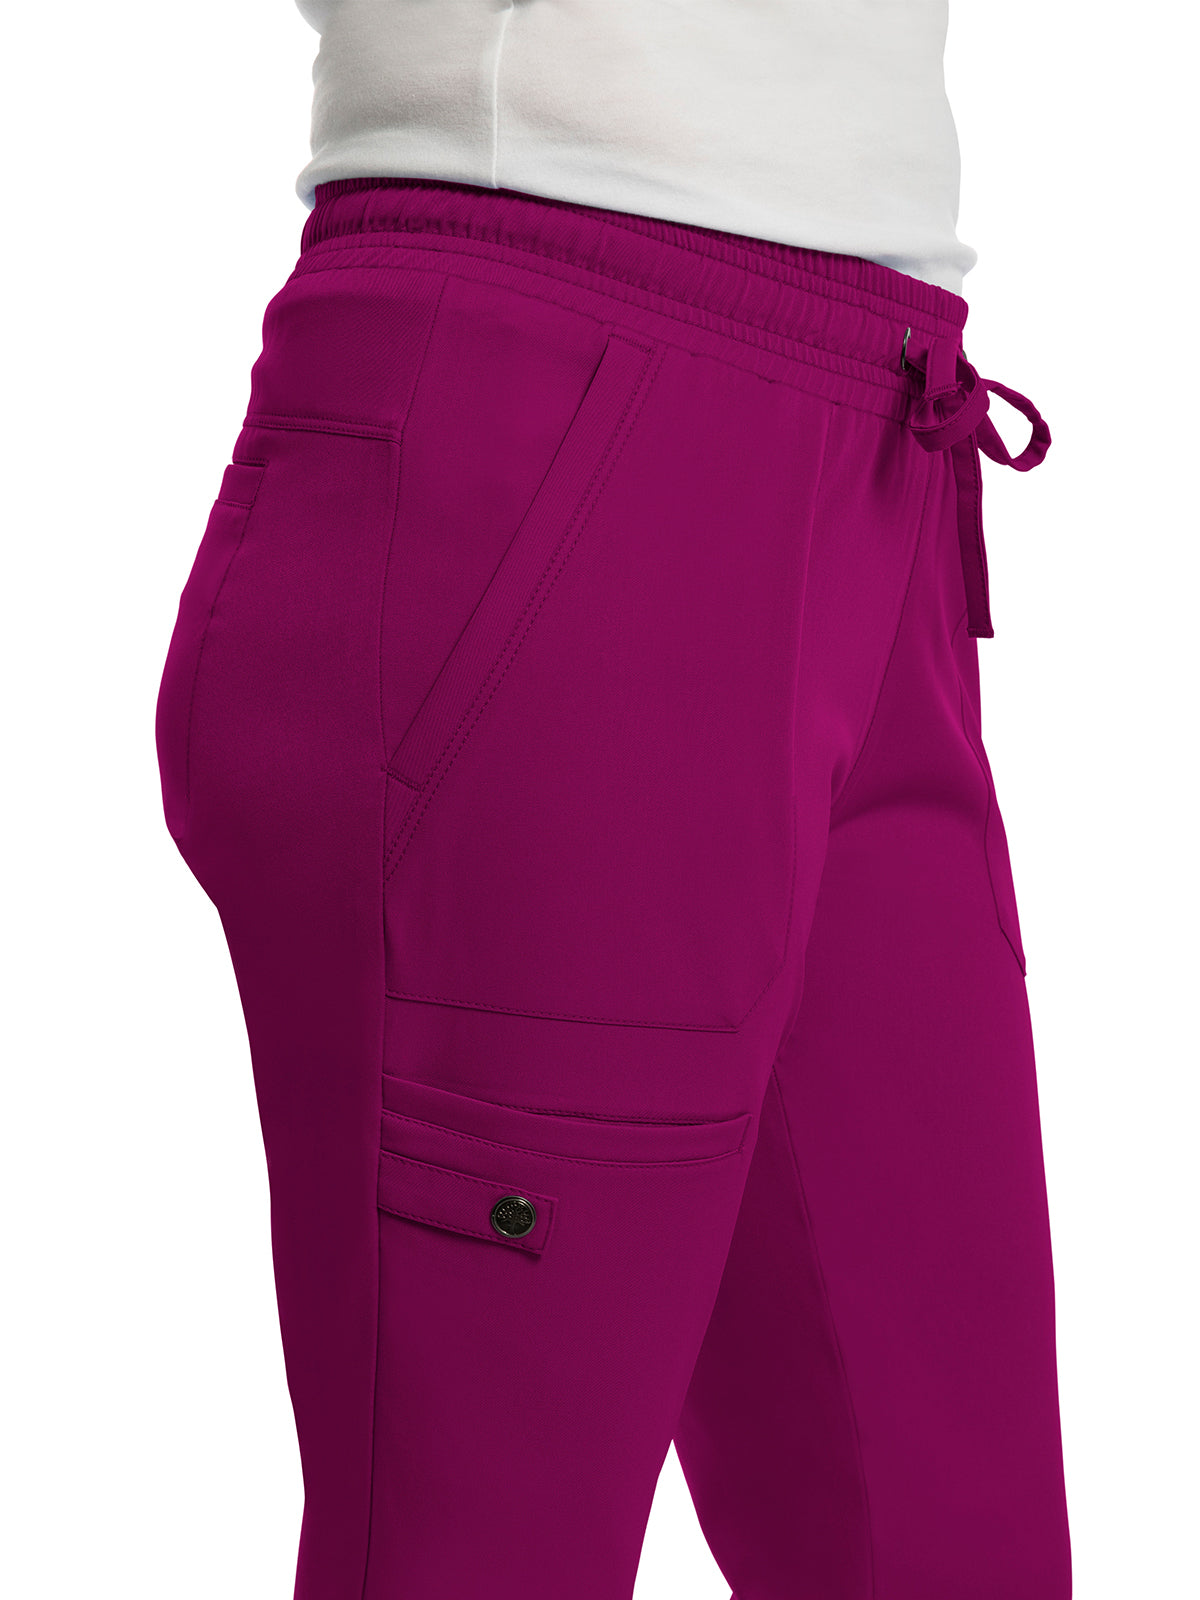 Women's Four-Way Stretch Fabric Pant - 9575 - Wine